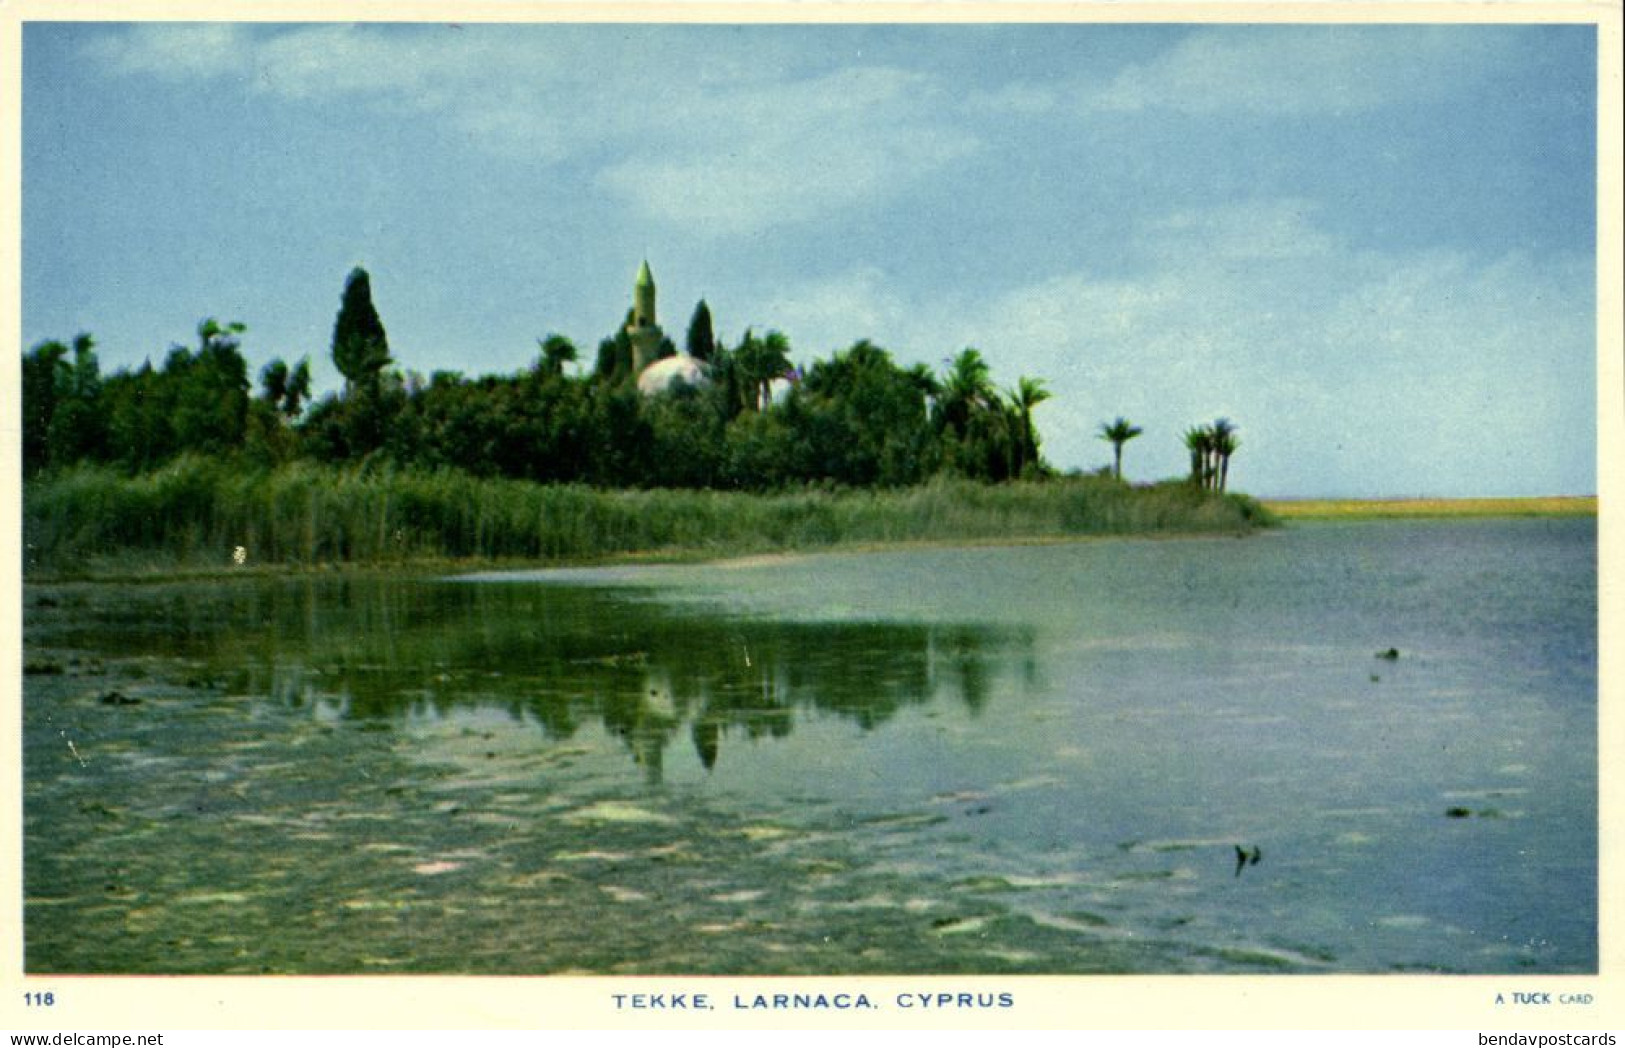 Cyprus, LARNACA, Hala Sultan Tekke Mosque (1960s) Raphael Tuck 118 Postcard - Chipre